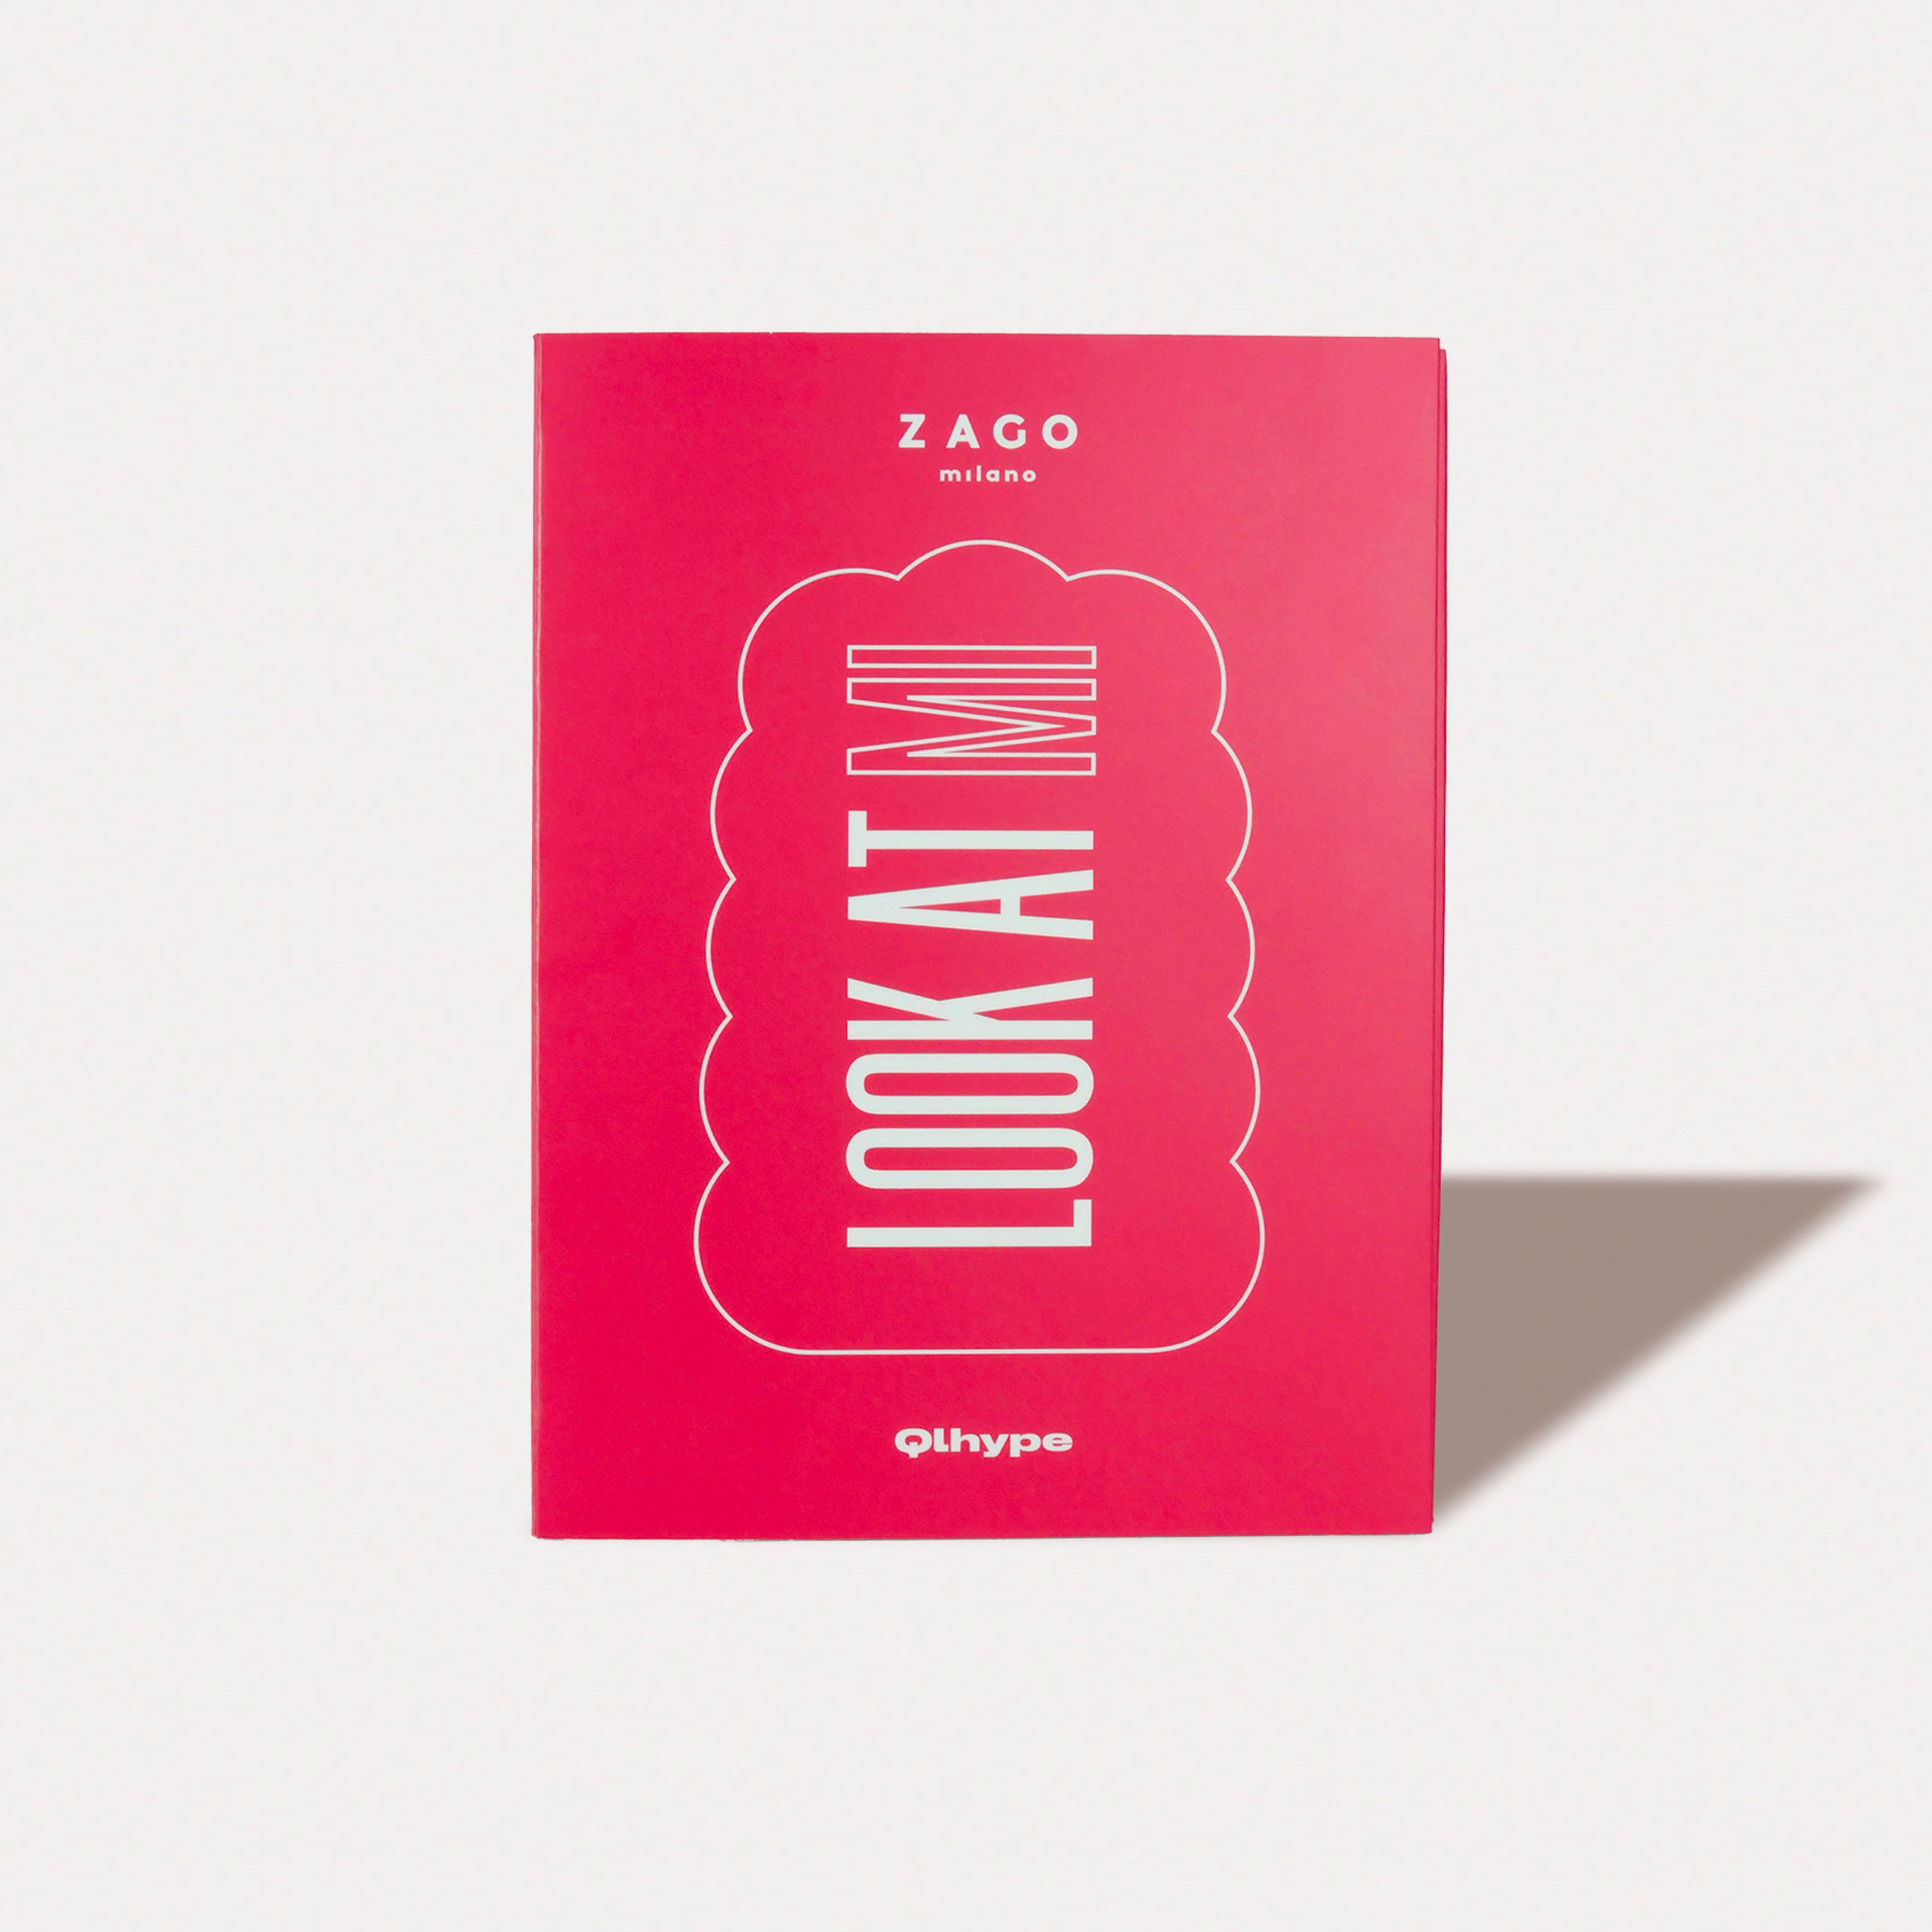 Zago Milano Look At Mi Box Limited Edition 2